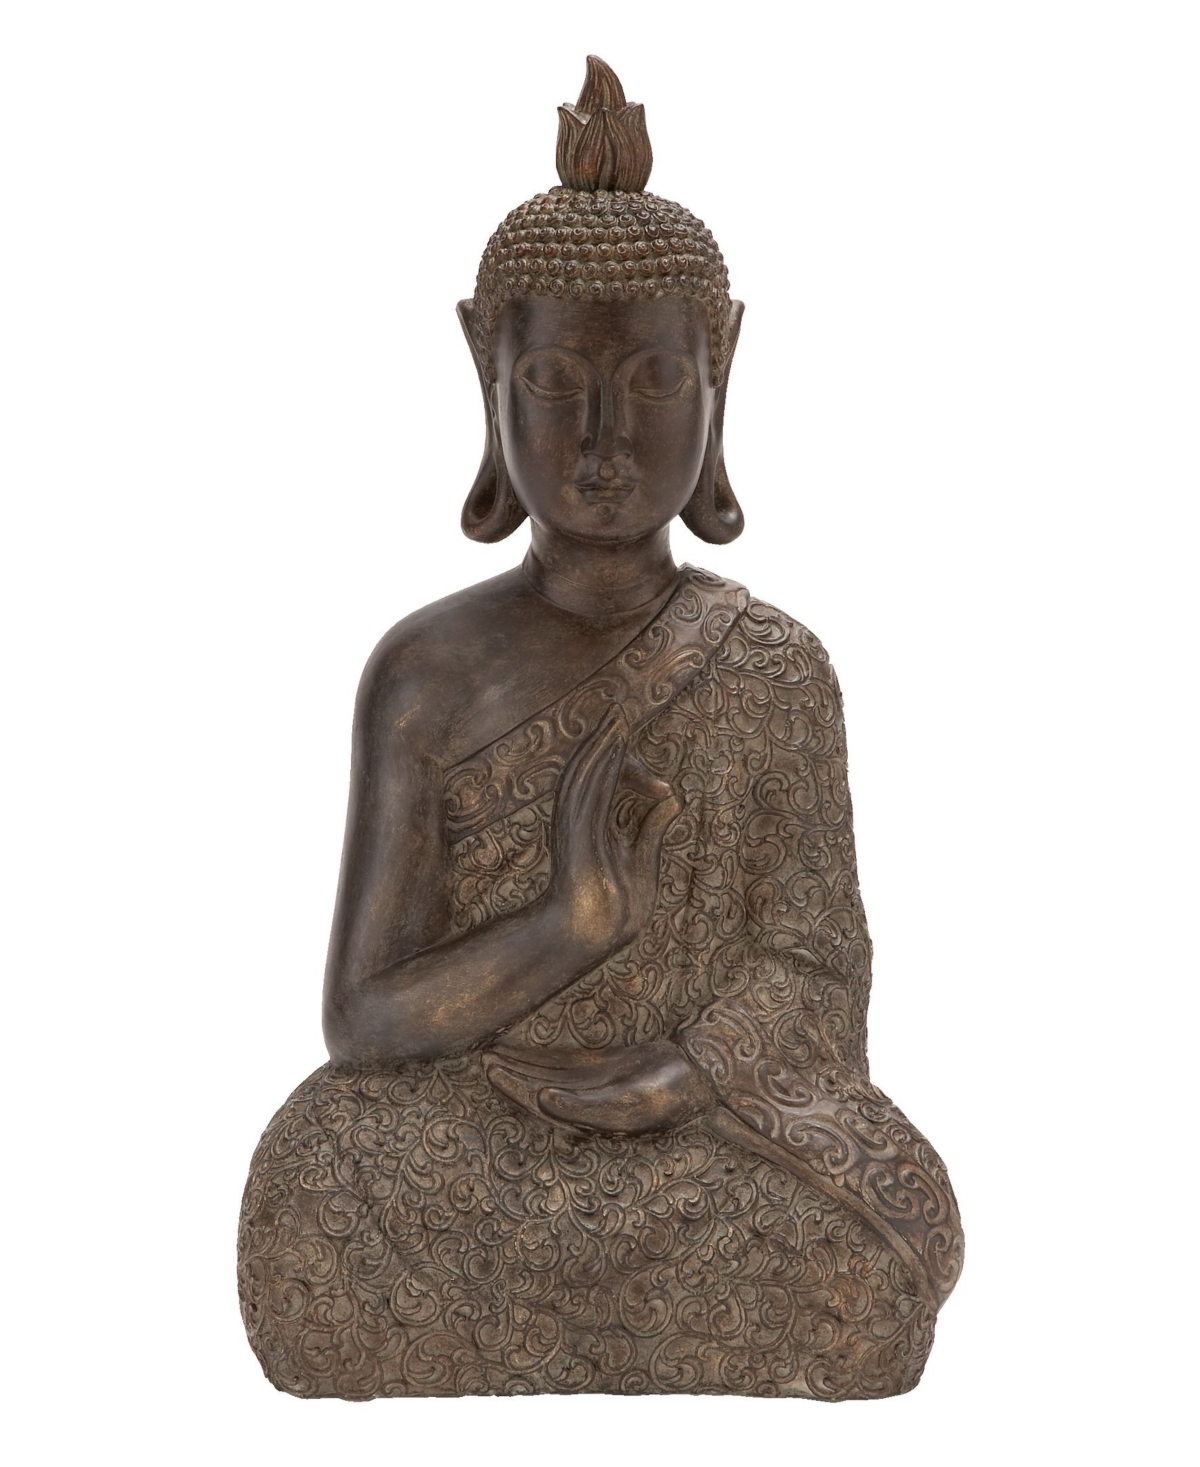 Rosemary Lane Bohemian Buddha Sculpture, 21" X 11" In Brown